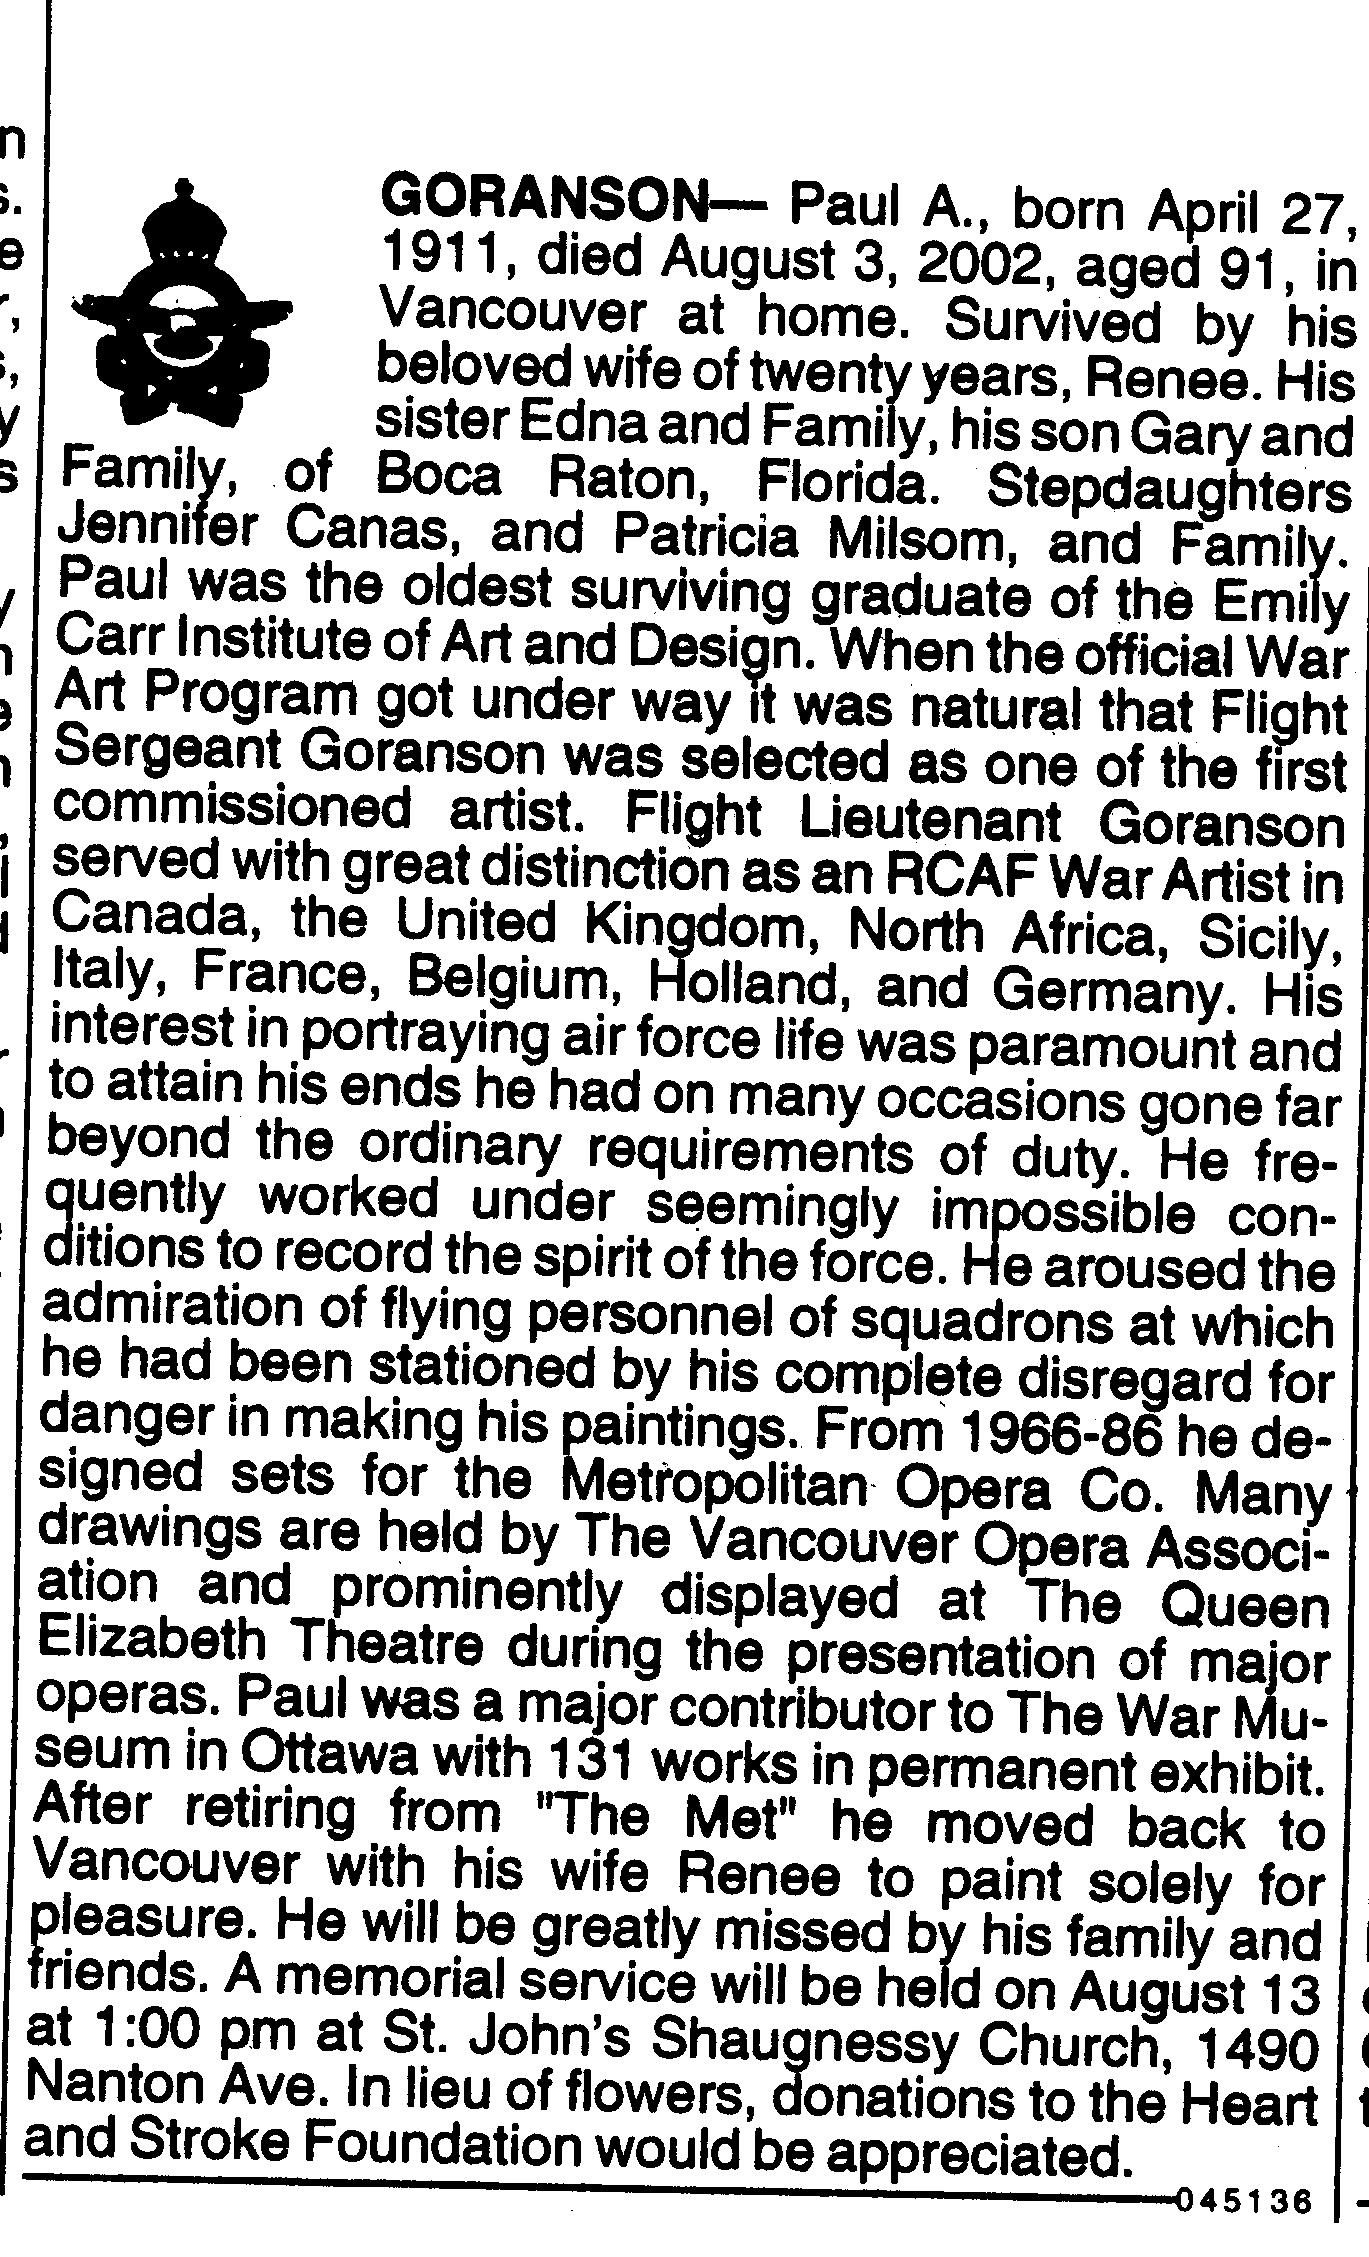 Paul Goranson Obituary Vancouver PROVINCE newspaper, 2002 August 11